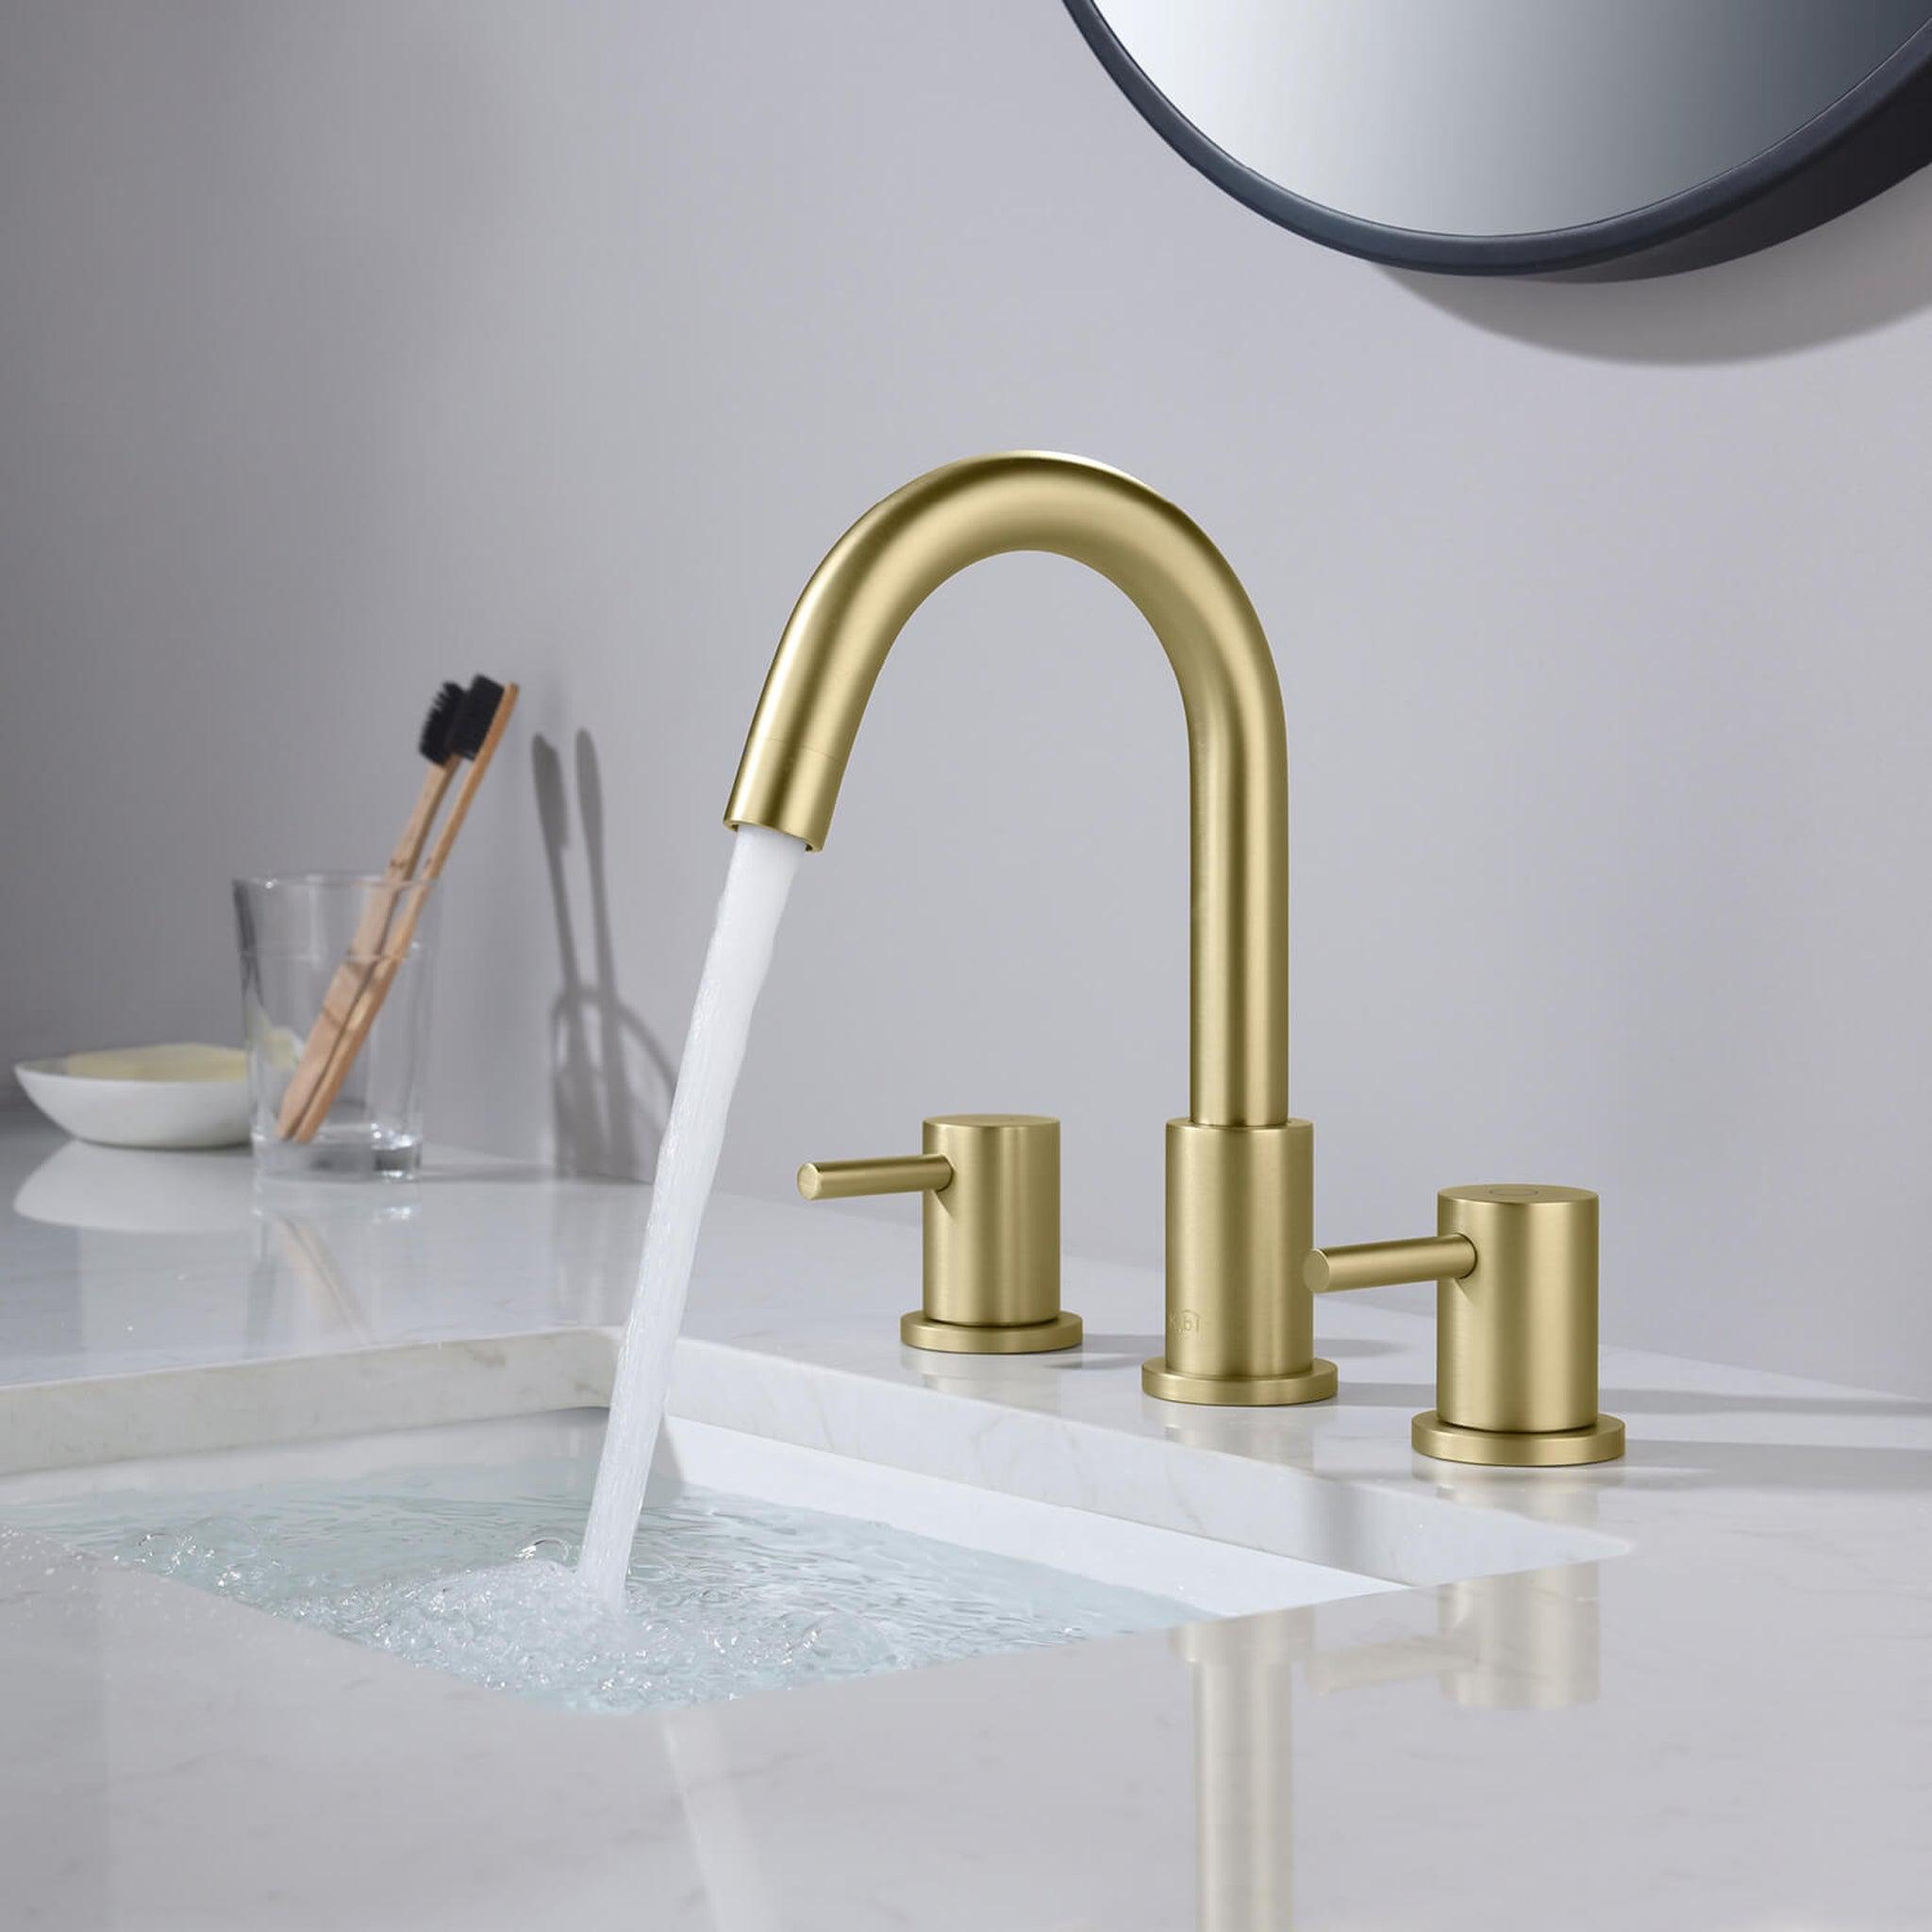 KIBI, KIBI Circular 8" Widespread 2-Handle Brushed Gold Solid Brass Bathroom Sink Faucet With Pop-Up Drain